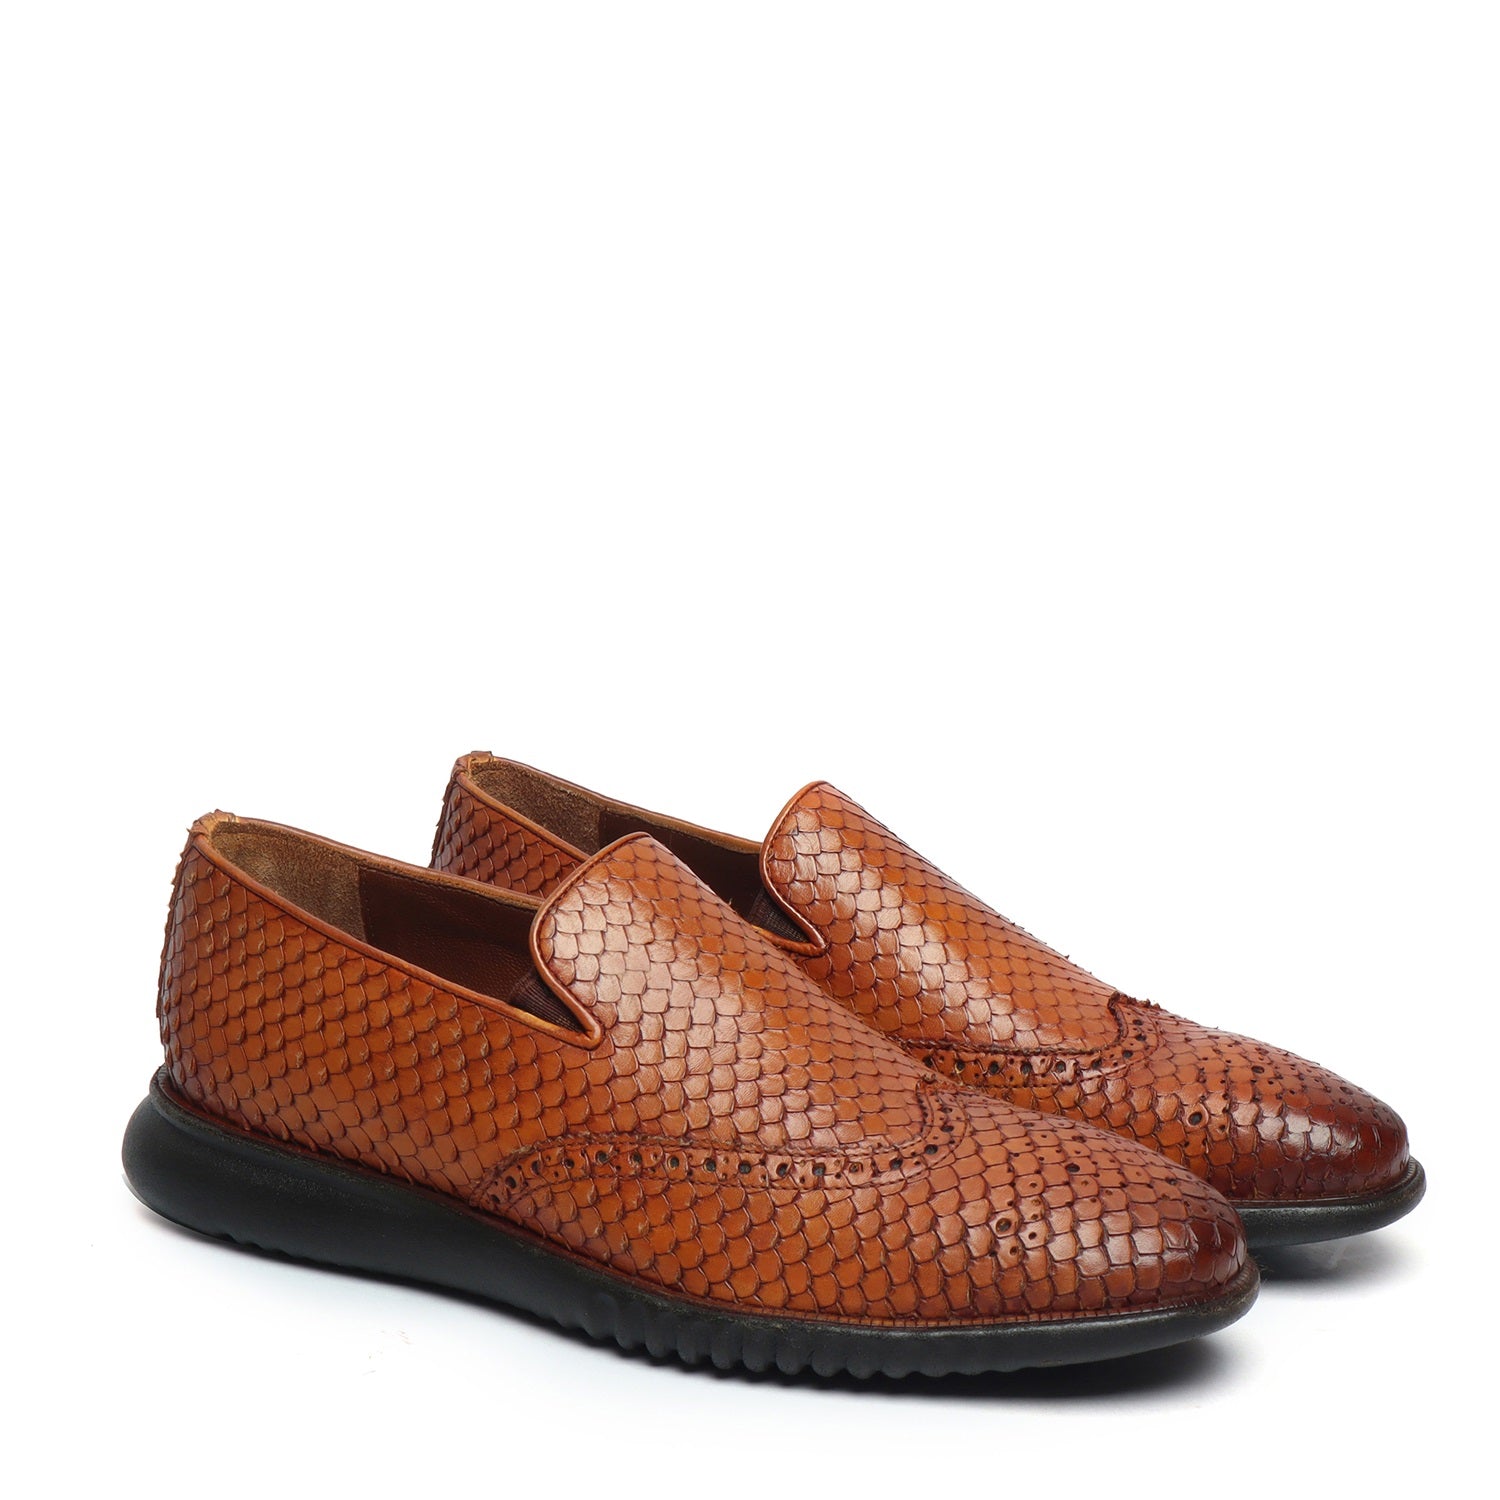 Tan Snake Skin Textured Burnished Leather Wingtip Light Weight Loafers By Brune & Bareskin